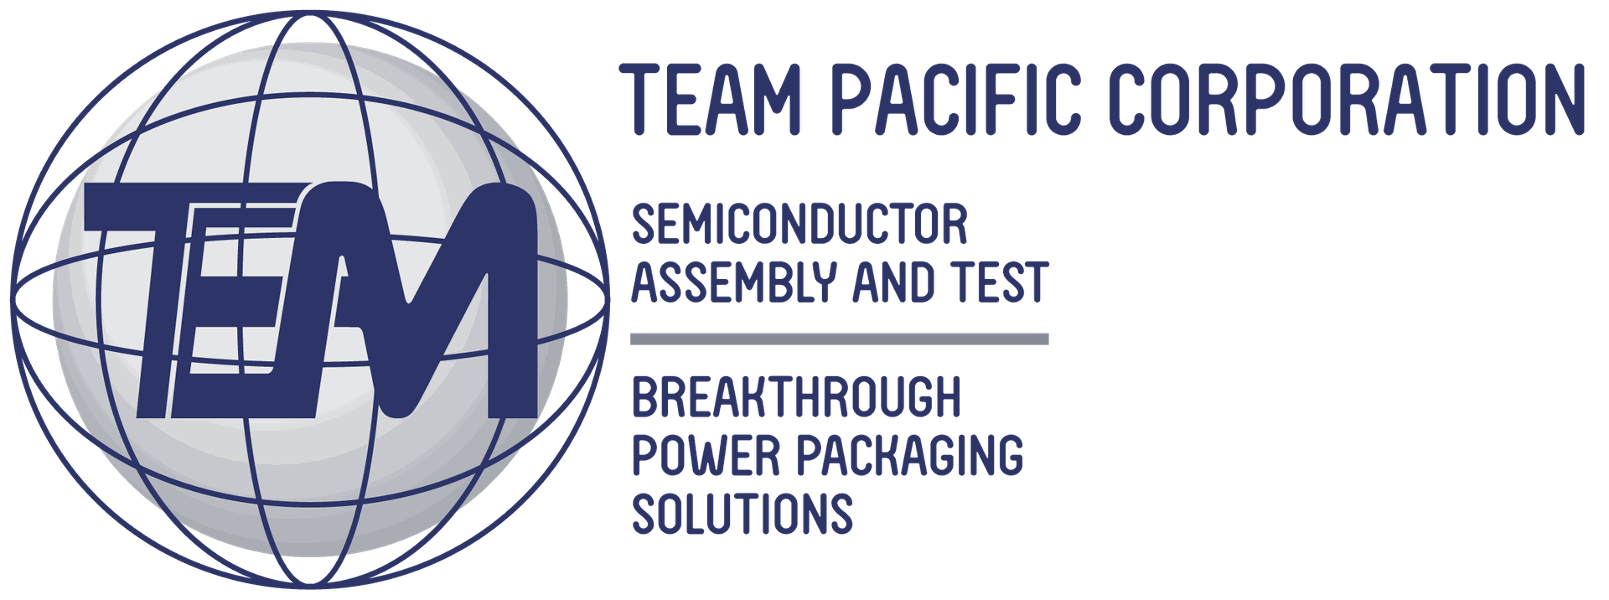 Team Pacific Corporation